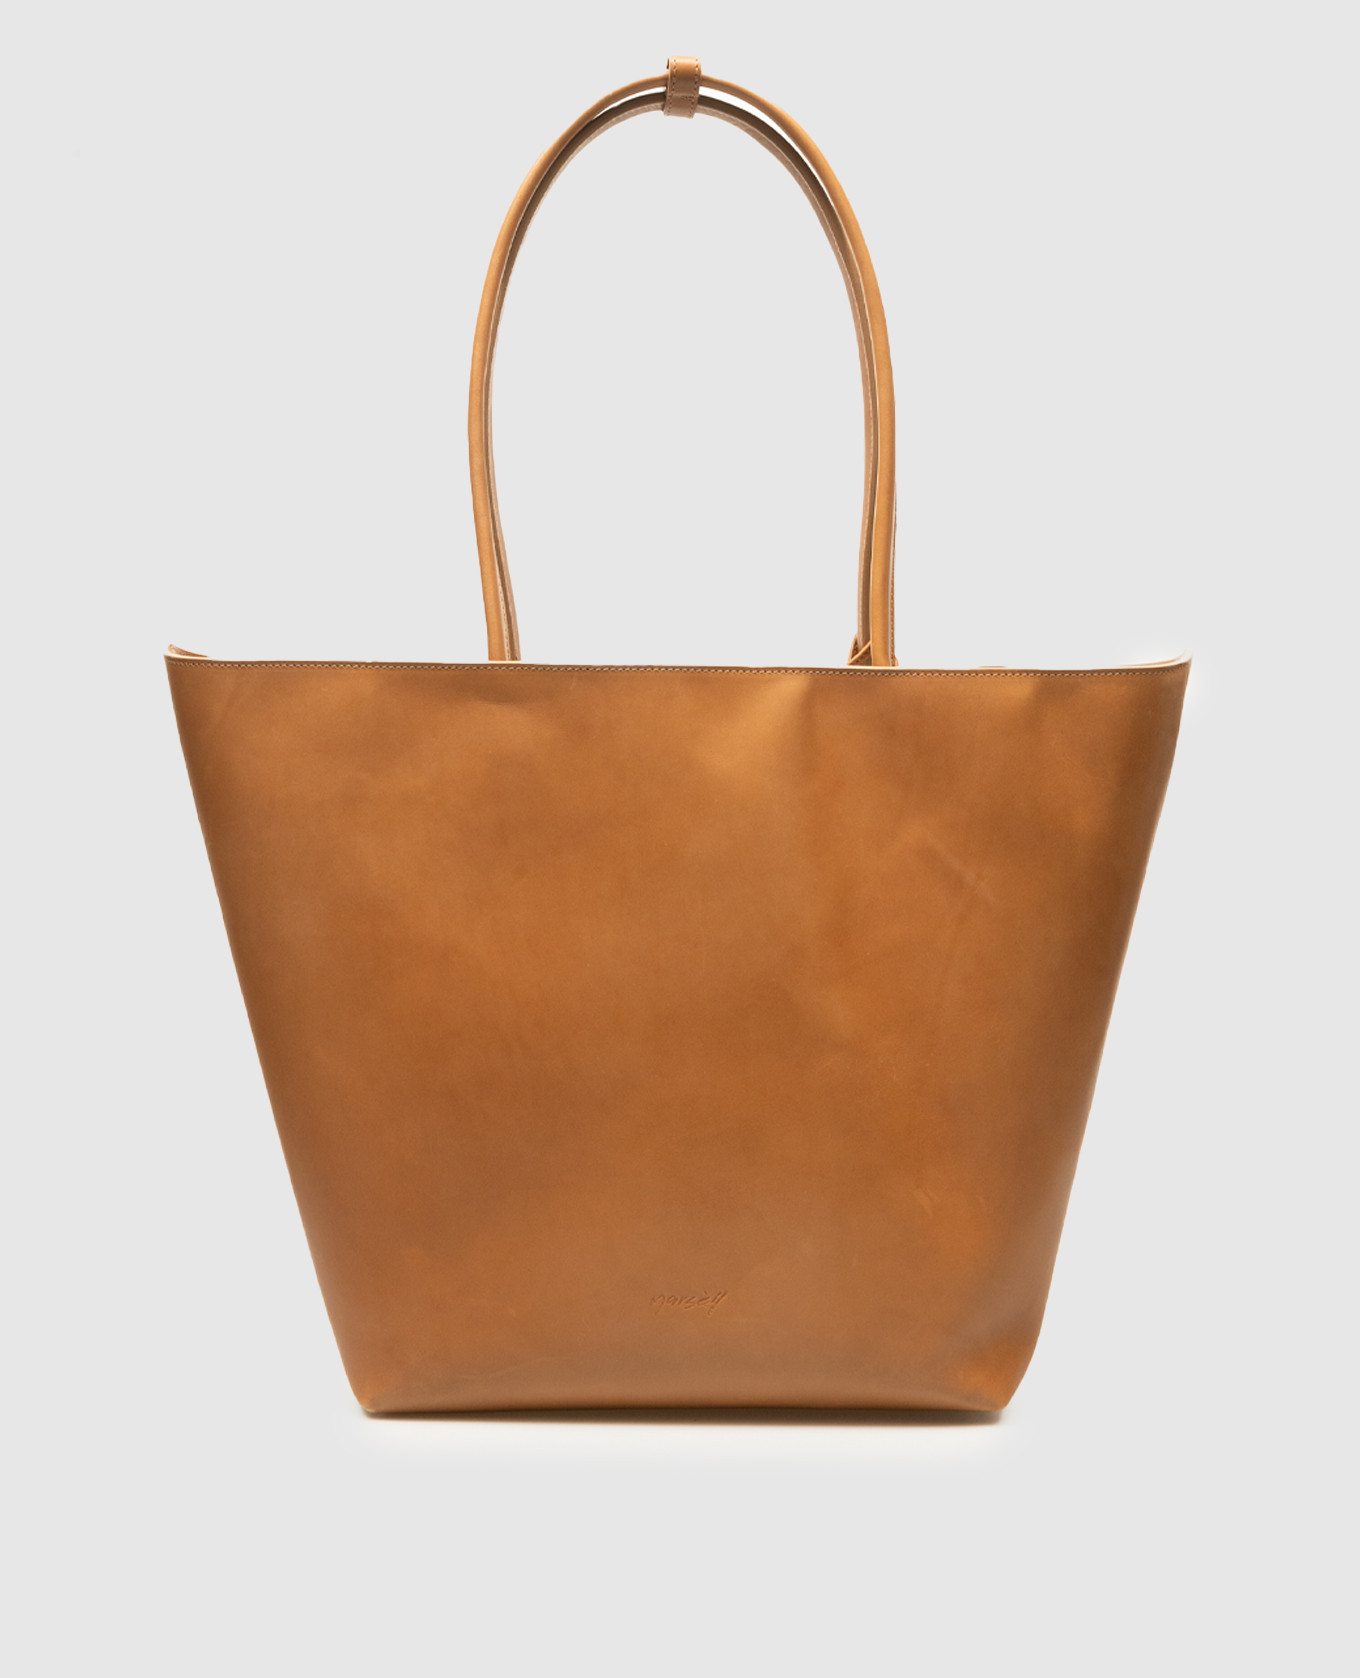 Svaso brown leather bag